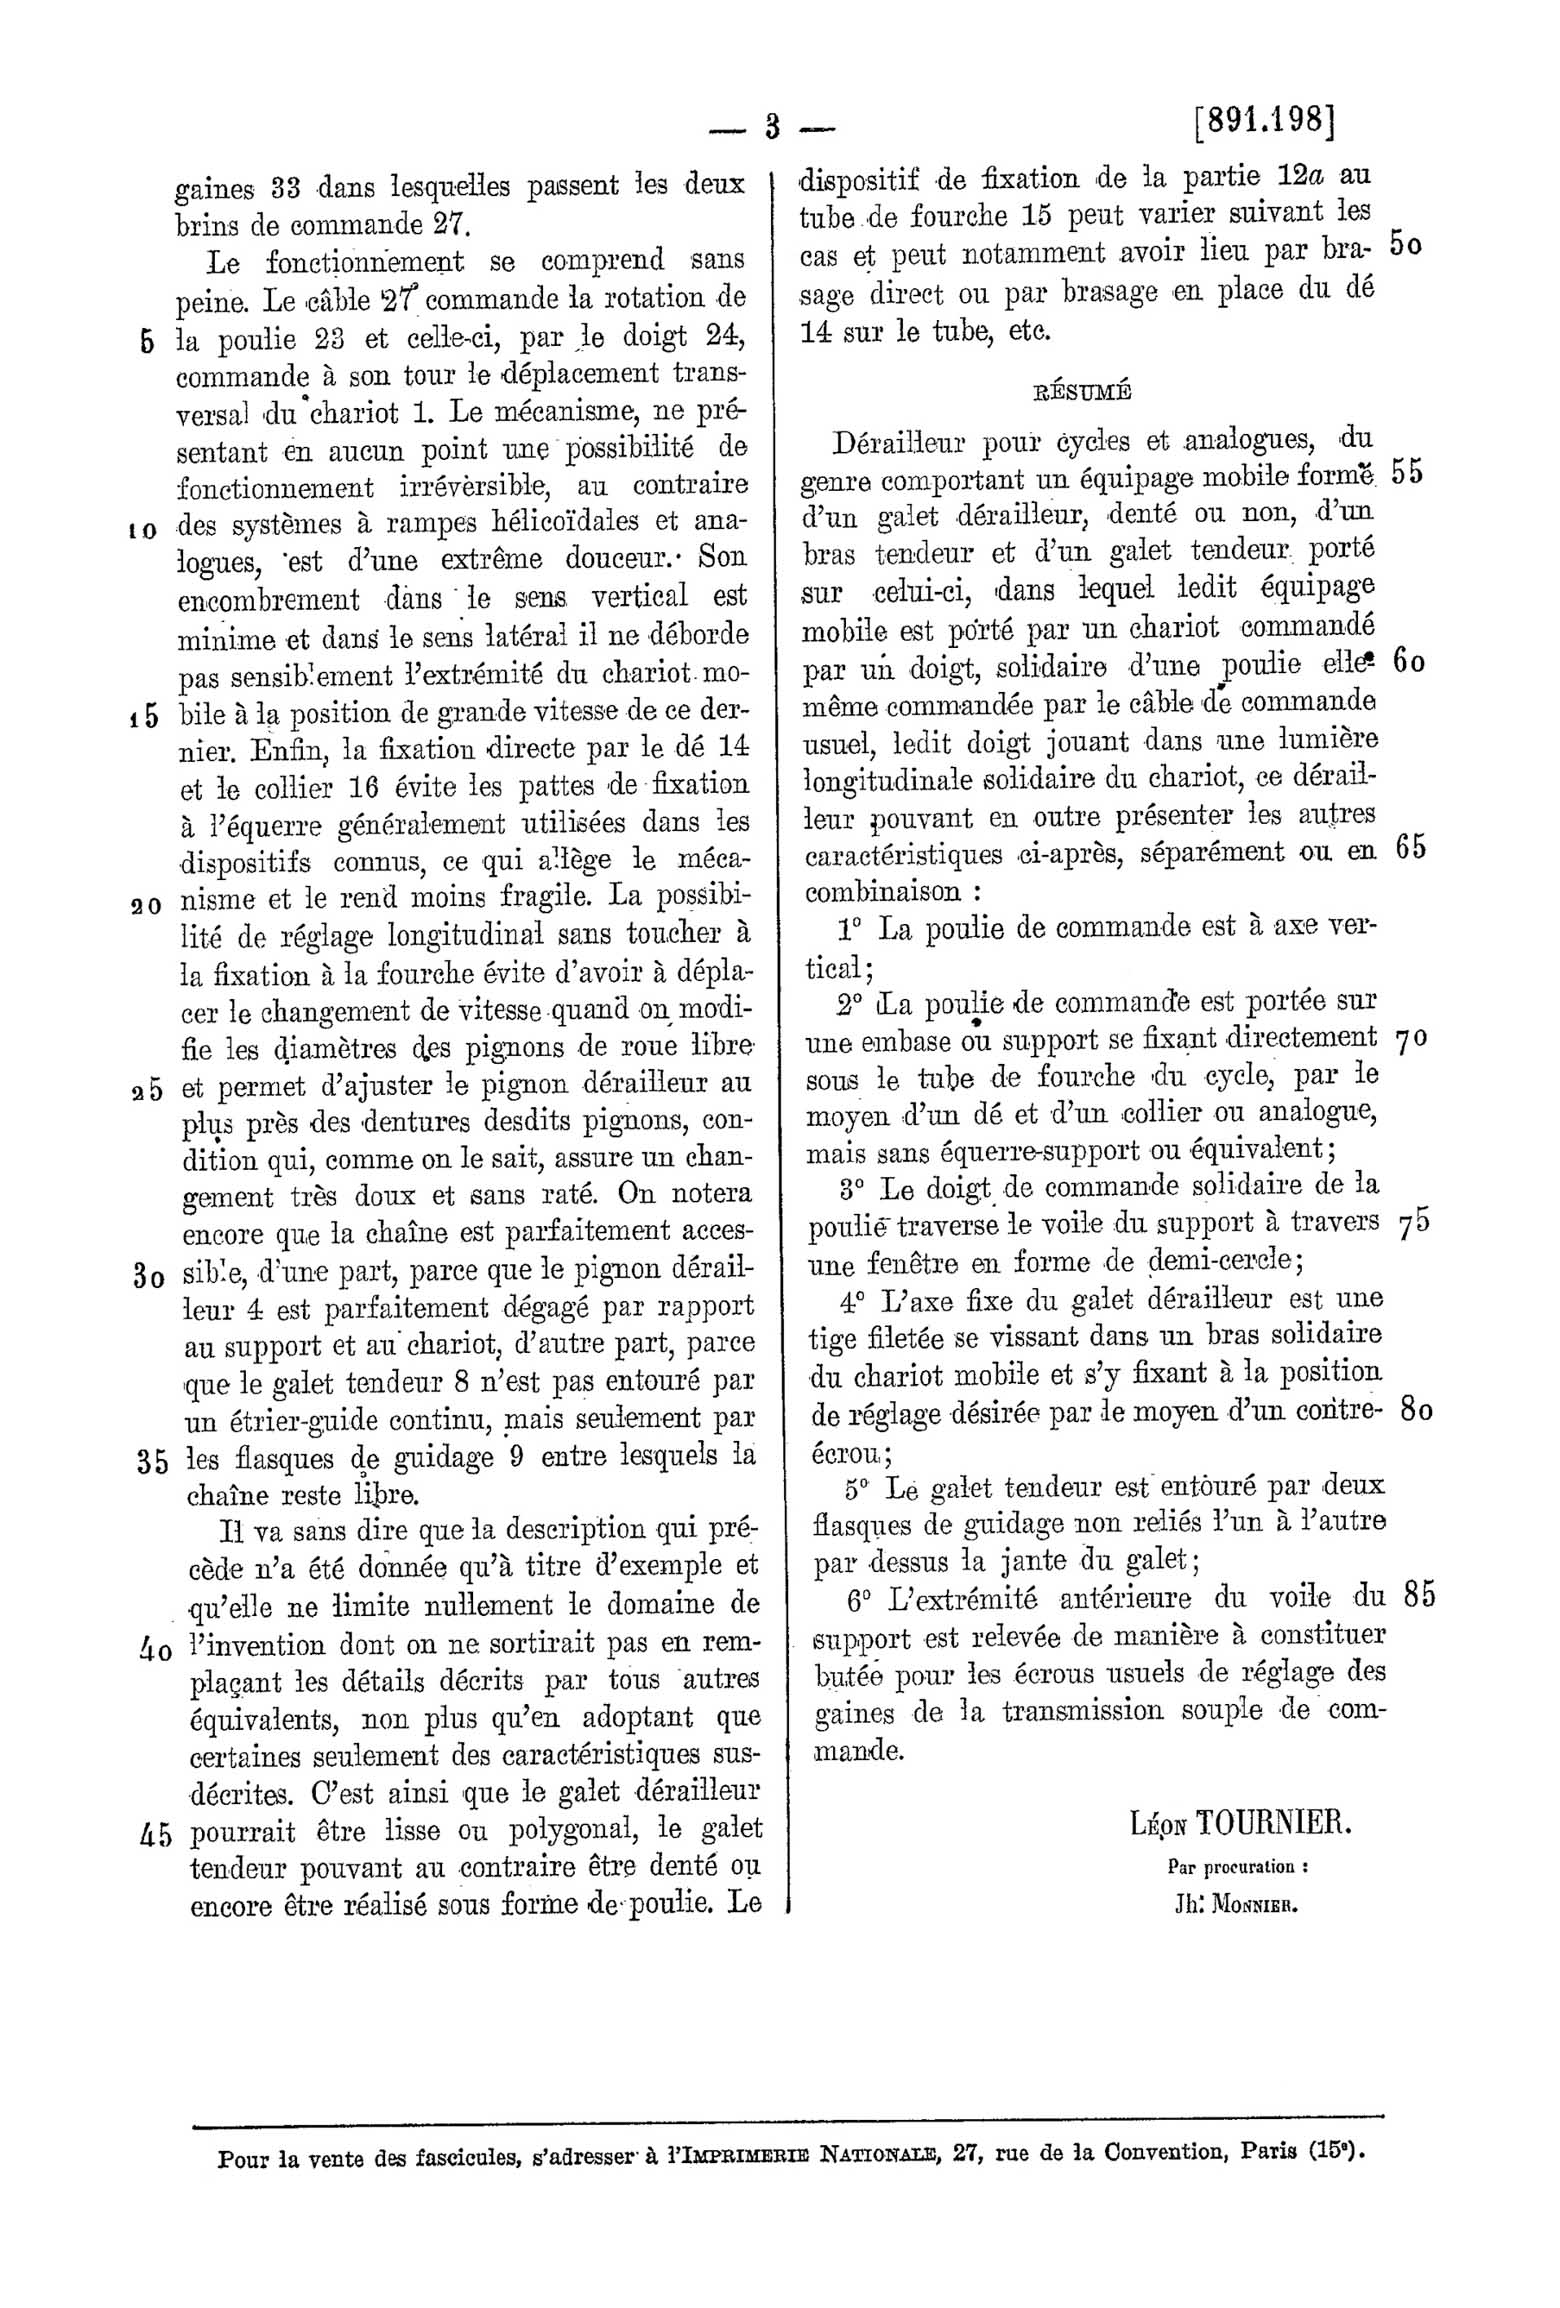 French Patent 891,198 - CMP Samson scan 3 main image